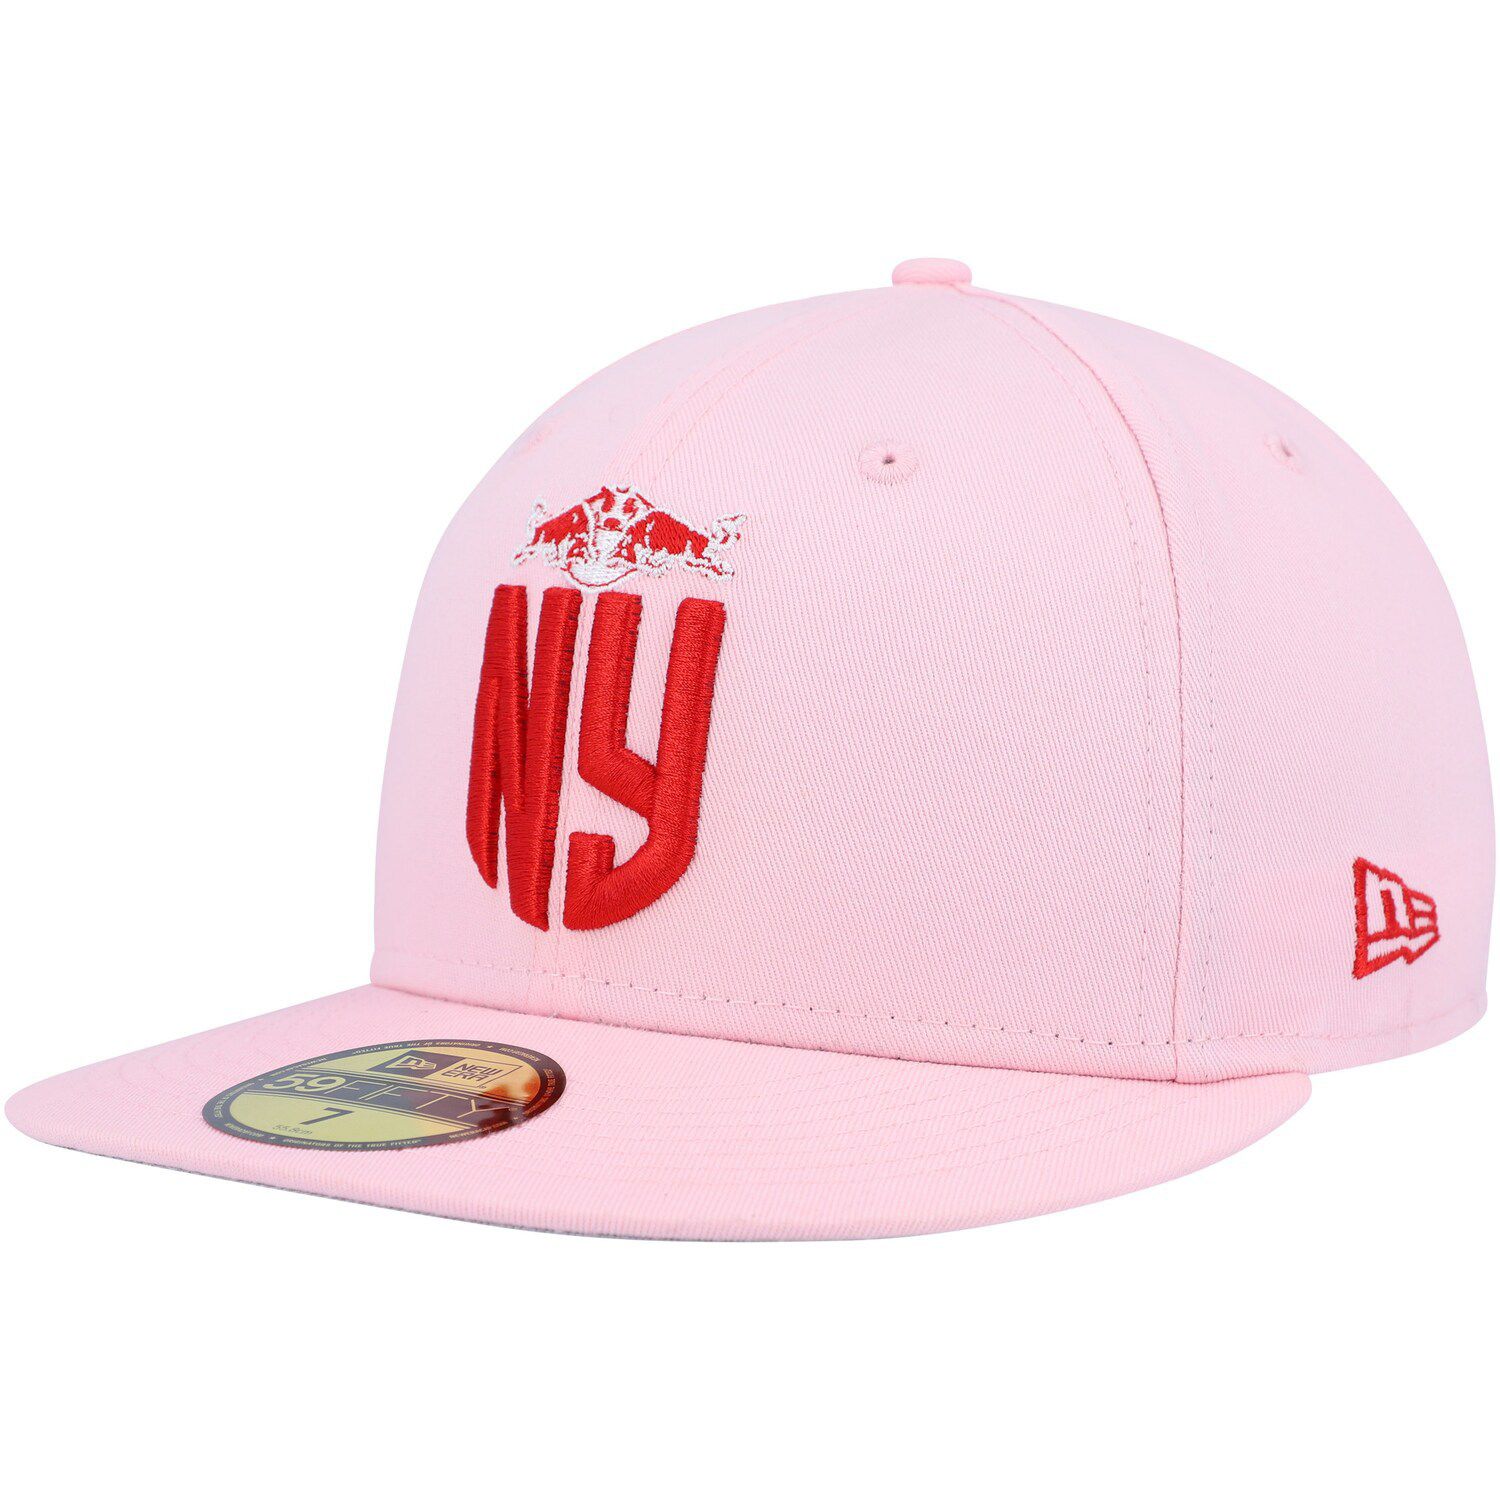 Men's New York Yankees New Era Red Lava Highlighter Logo 59FIFTY